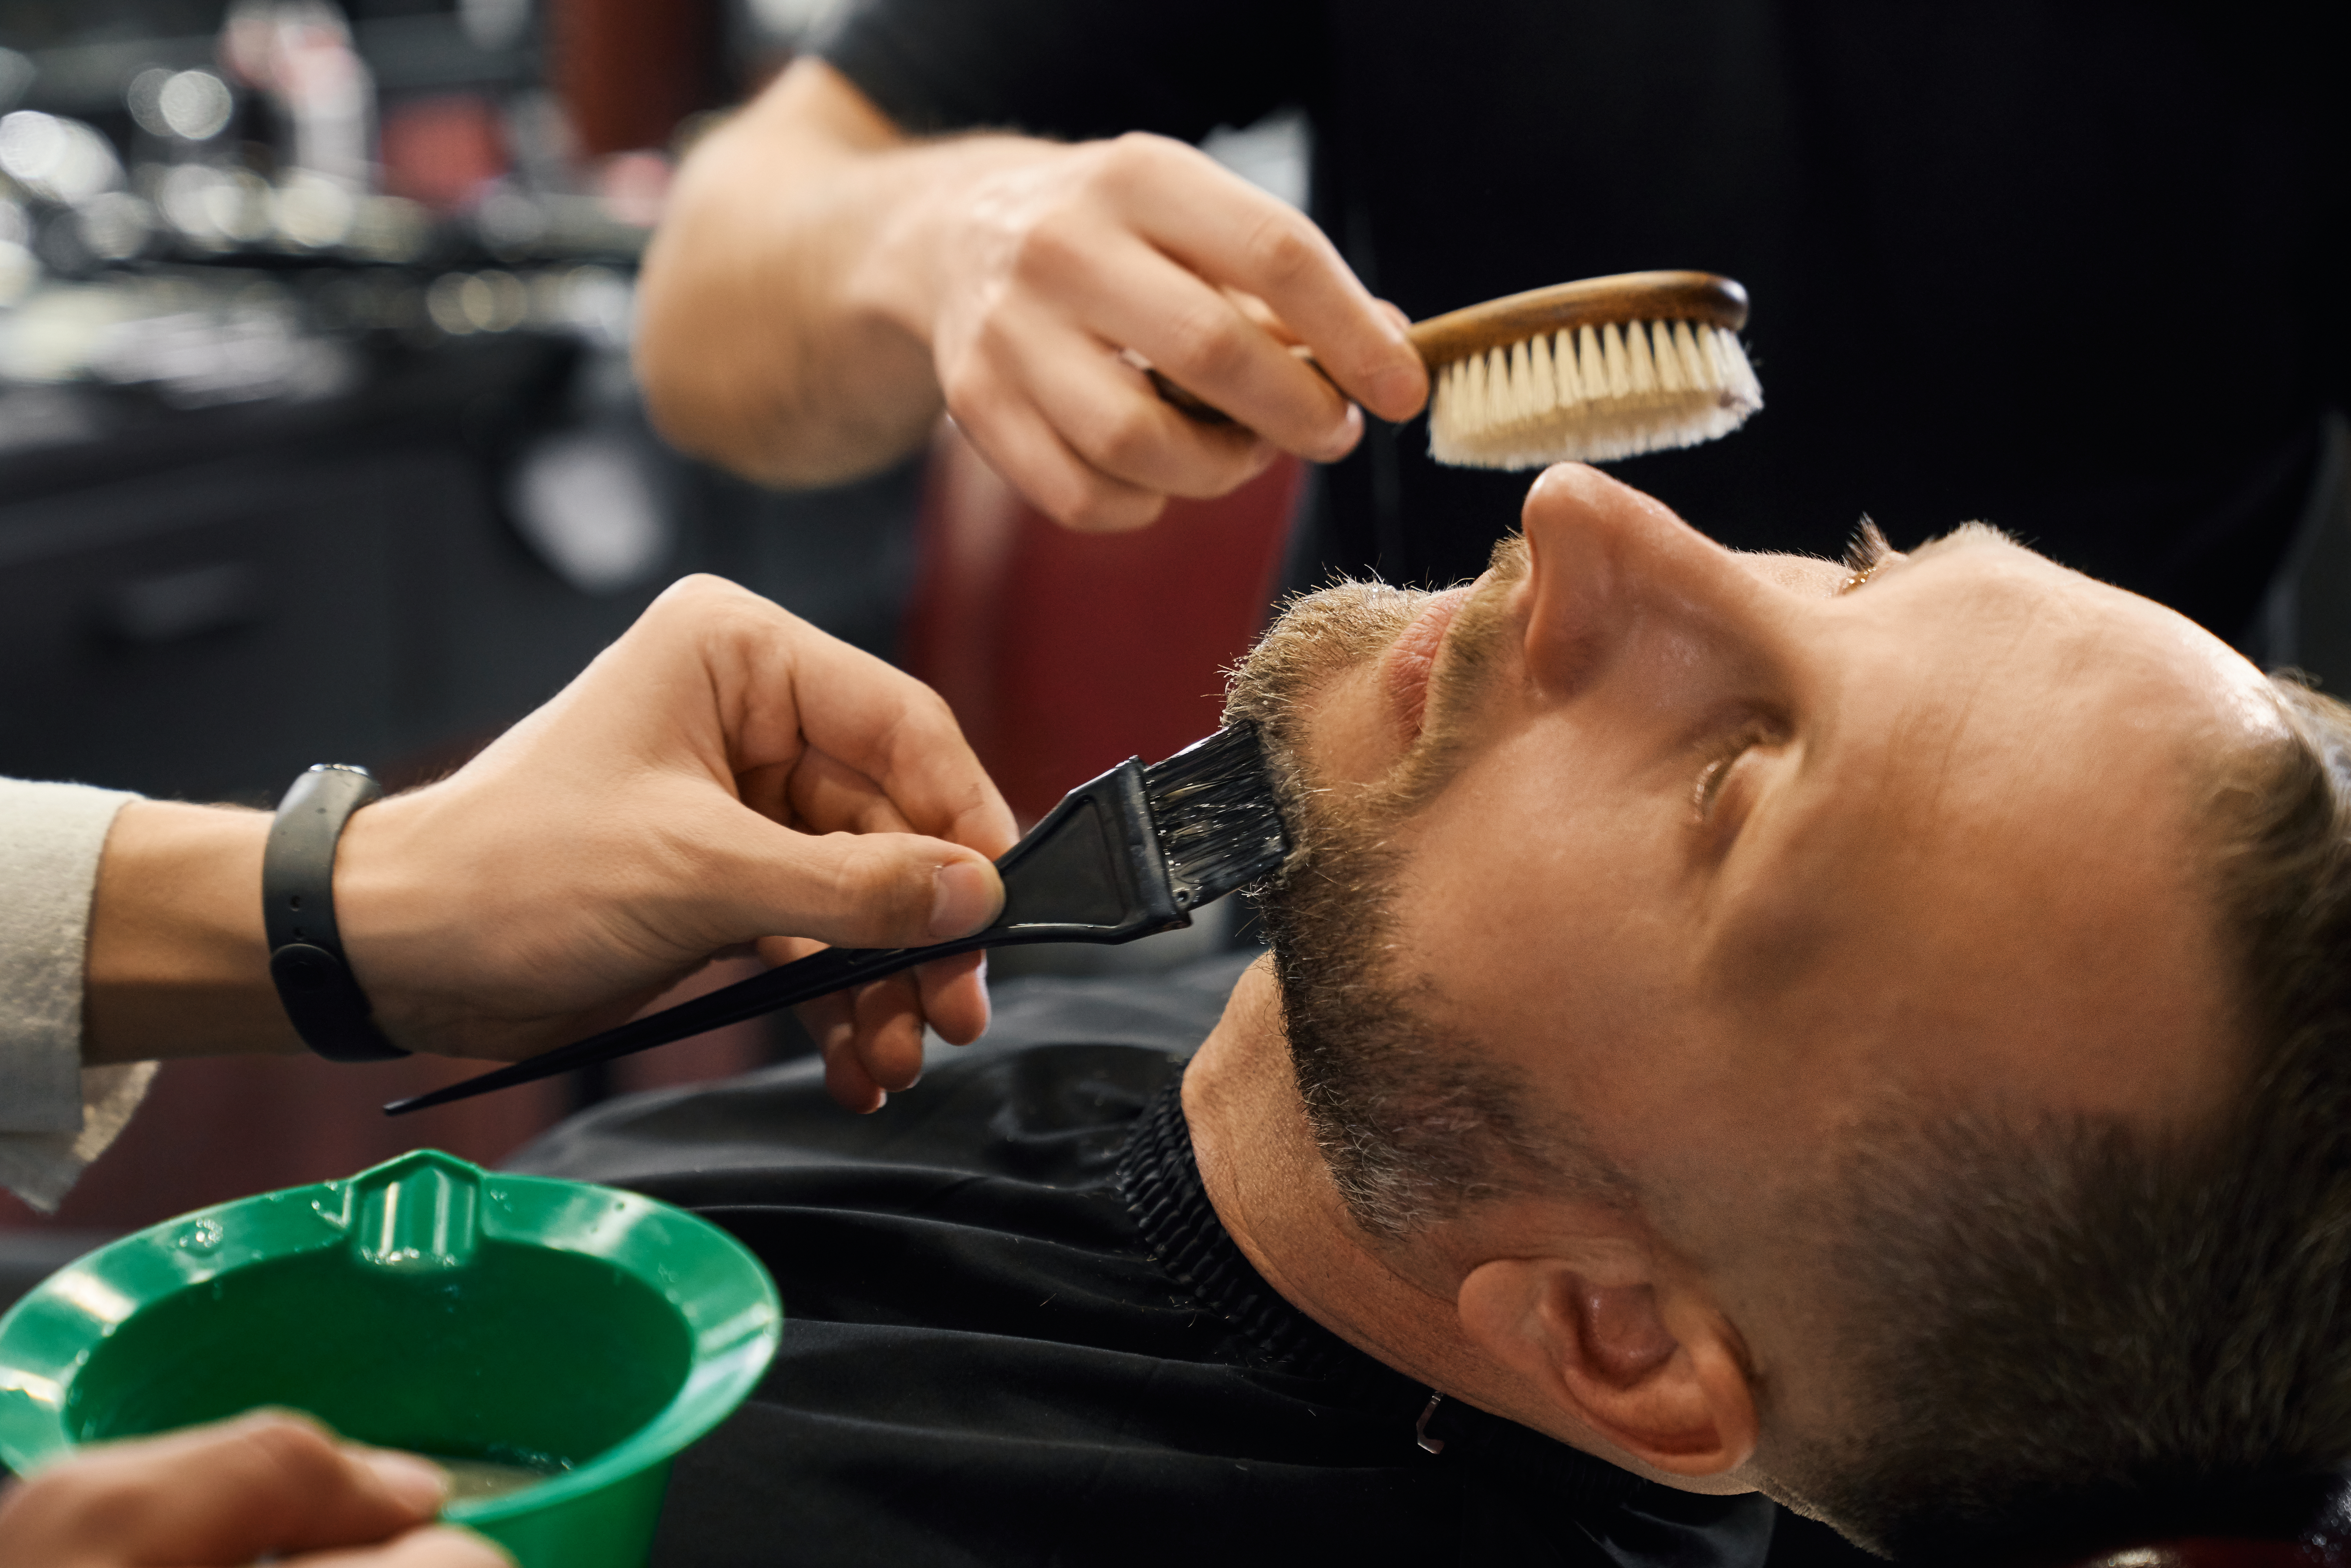 Hair Color Treatment for Men in Dubai